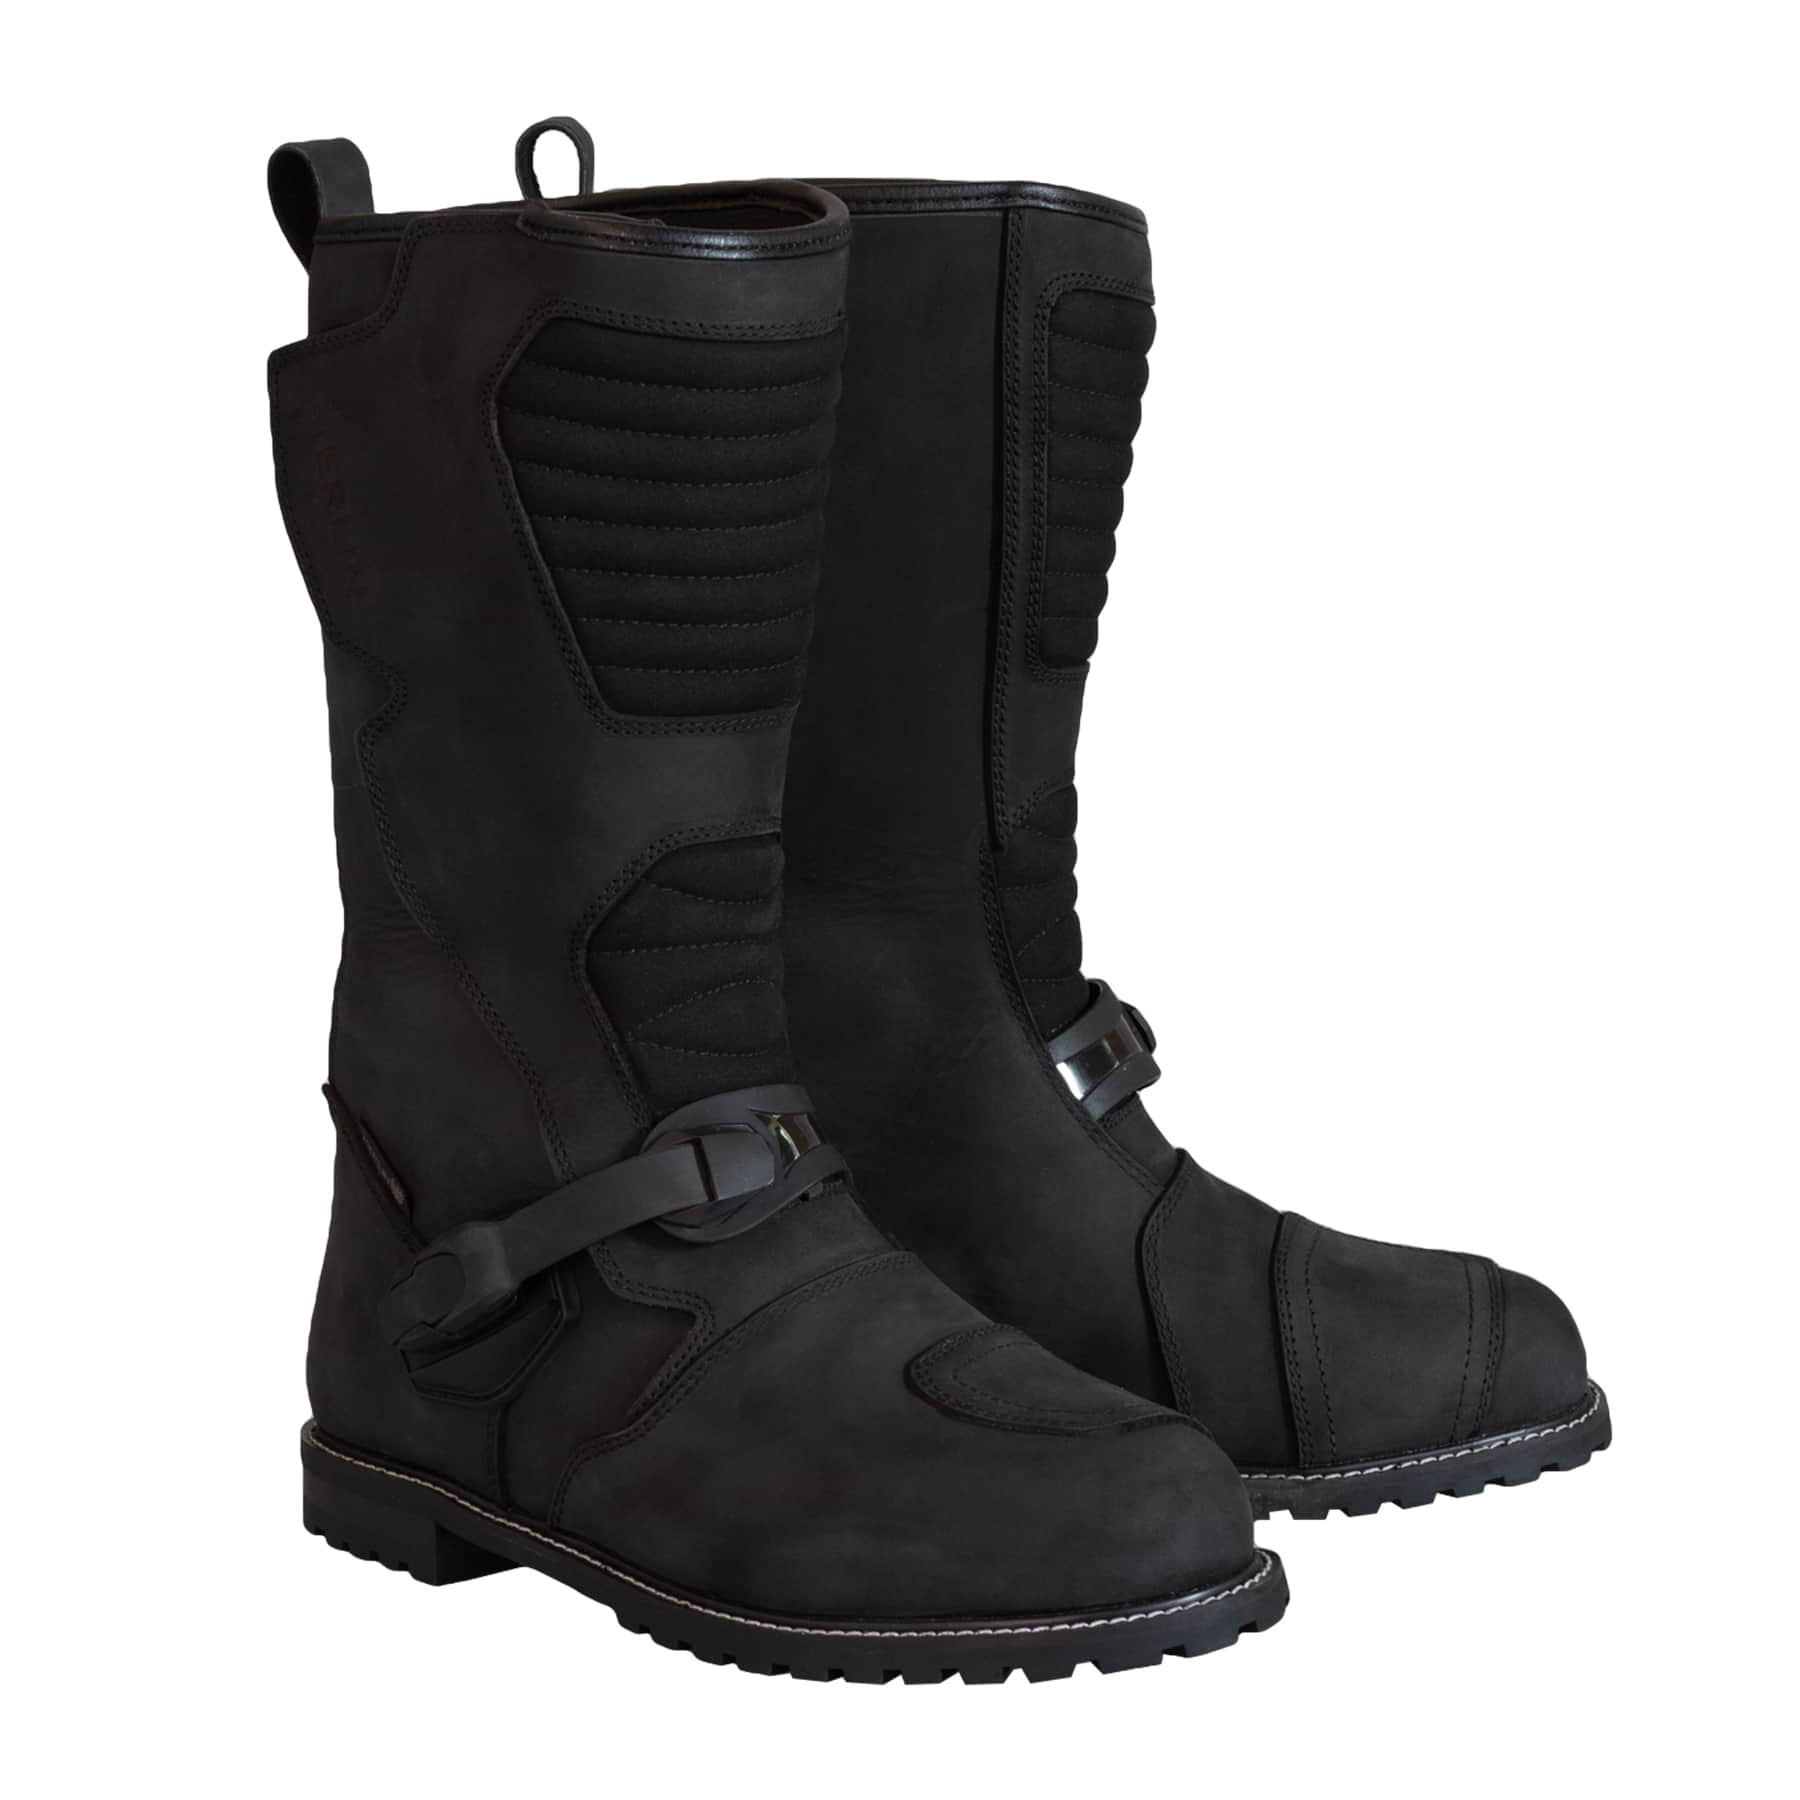 Studio image of Merlin Teton boots in black